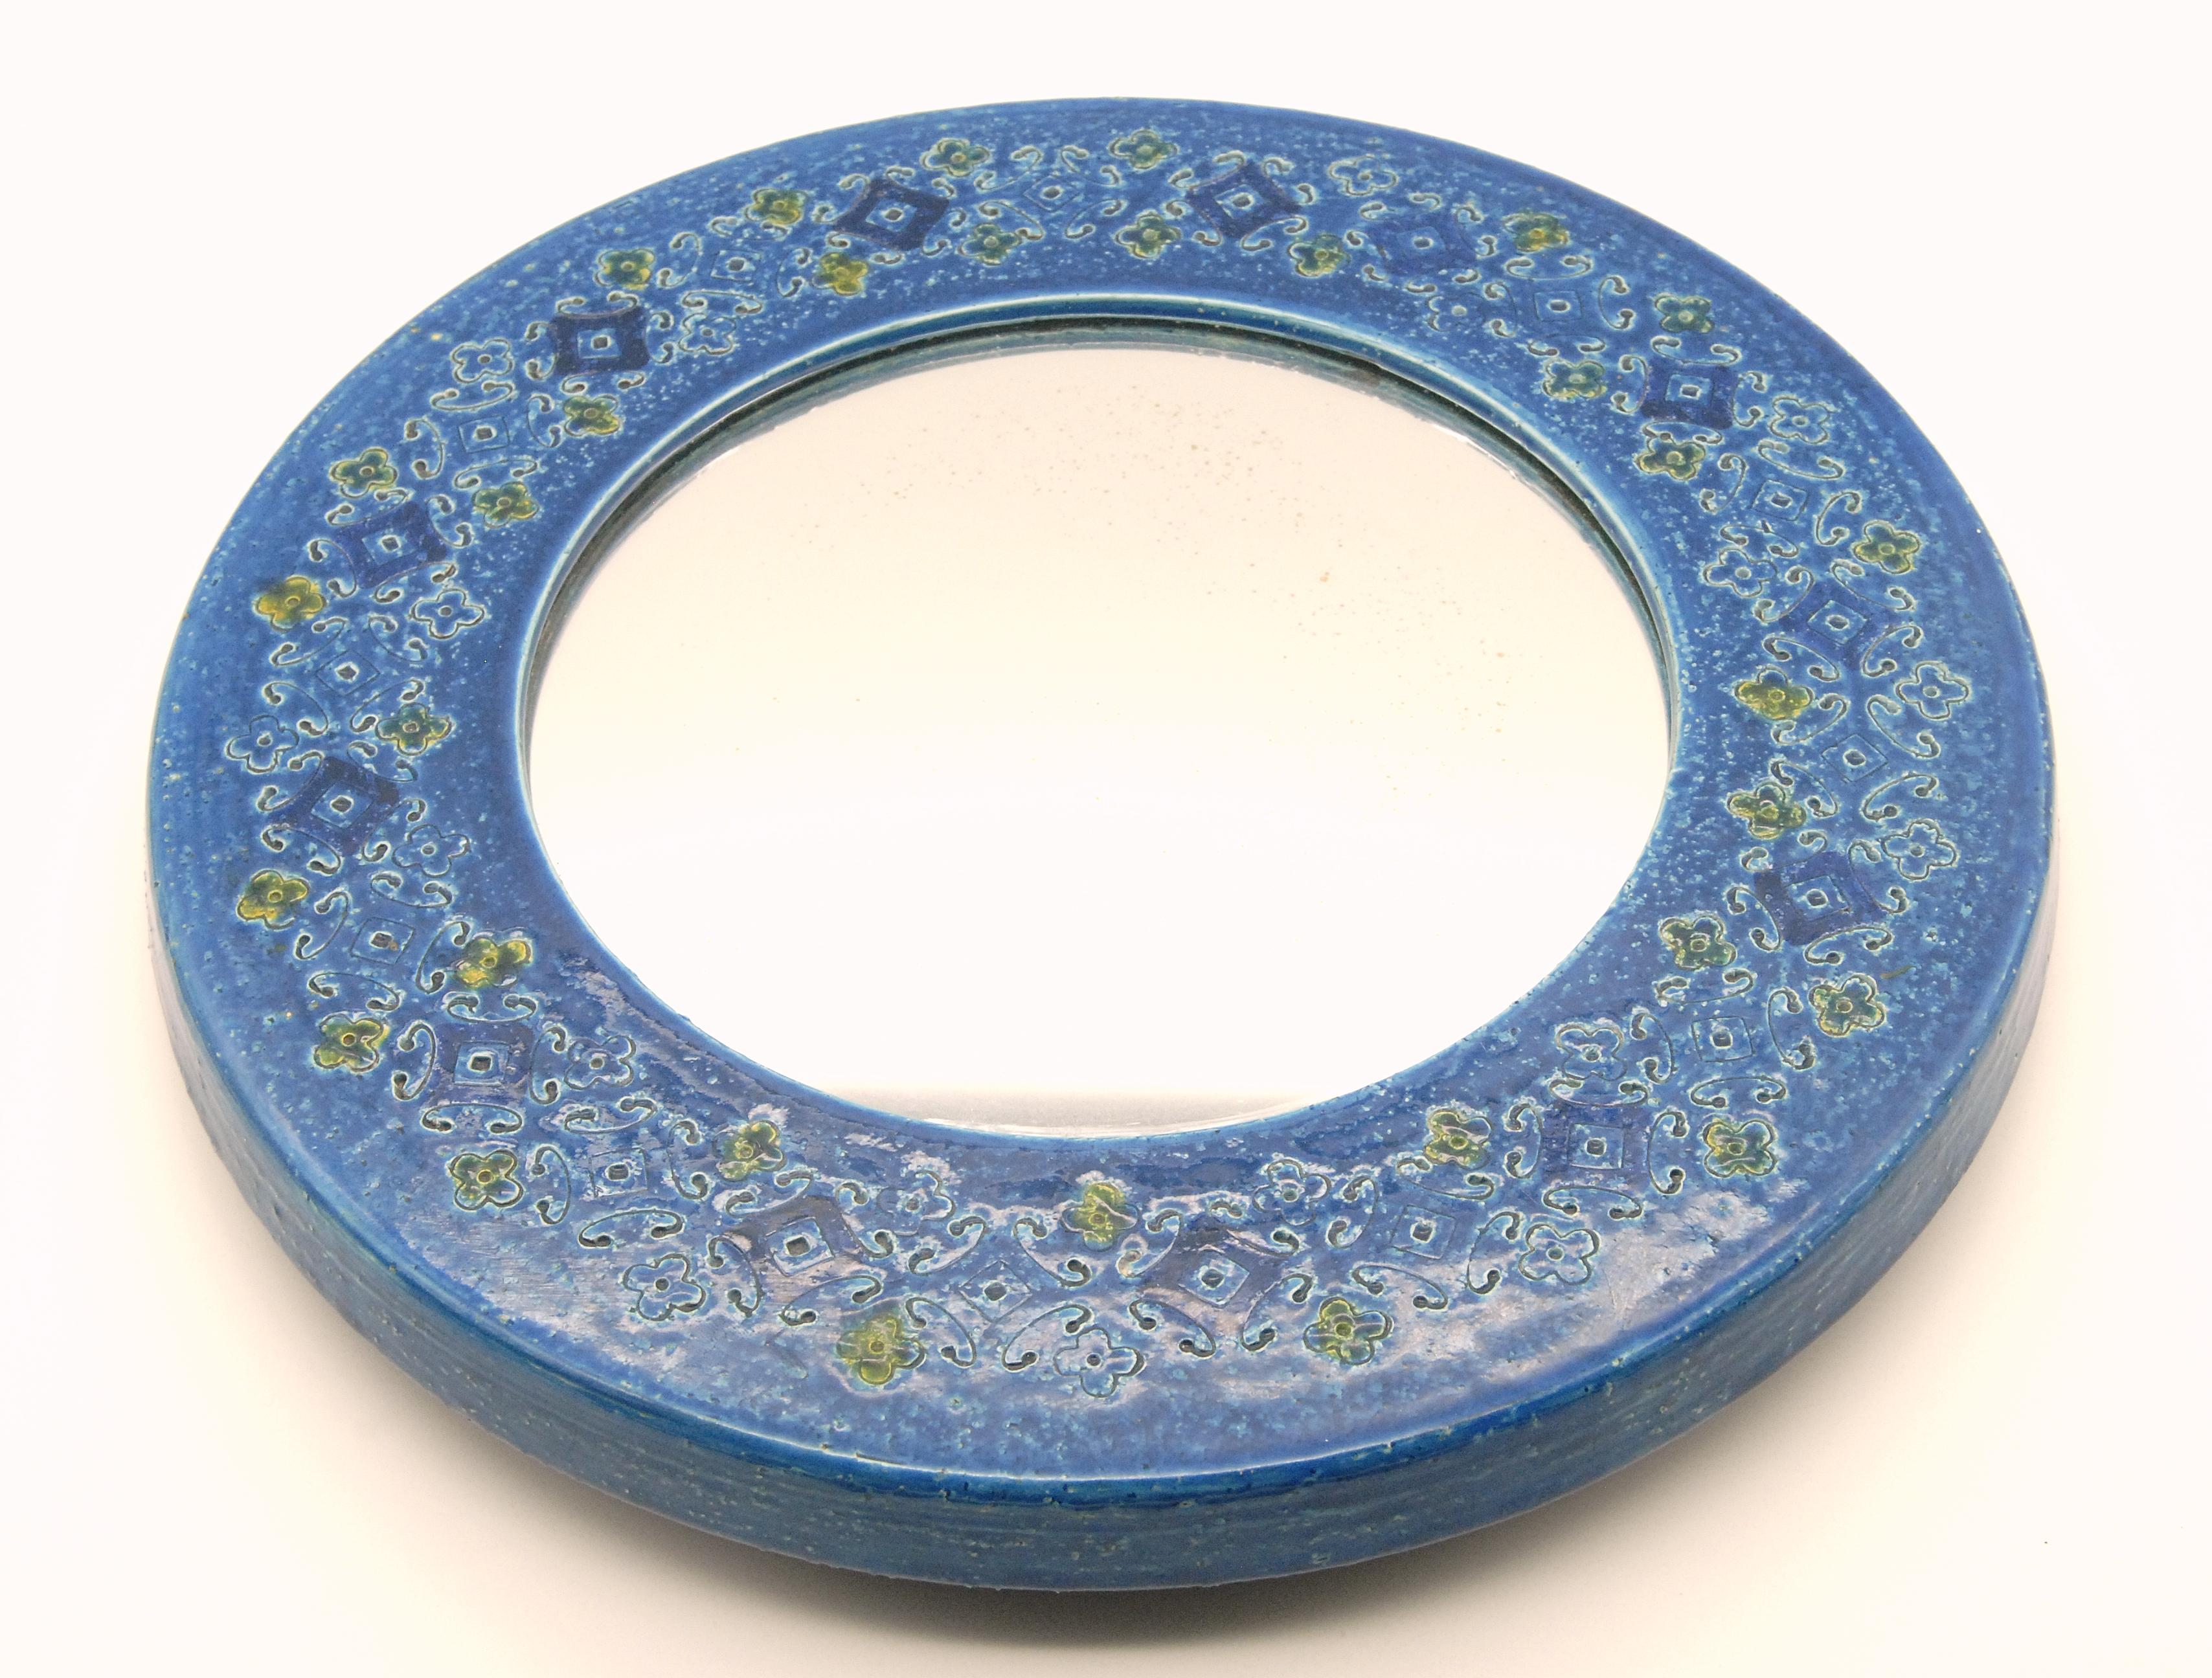 A rare circular mirror frame designed by Aldo Londi for Bitossi in the mid-1960s. 'Spagnoli' pattern in blue.